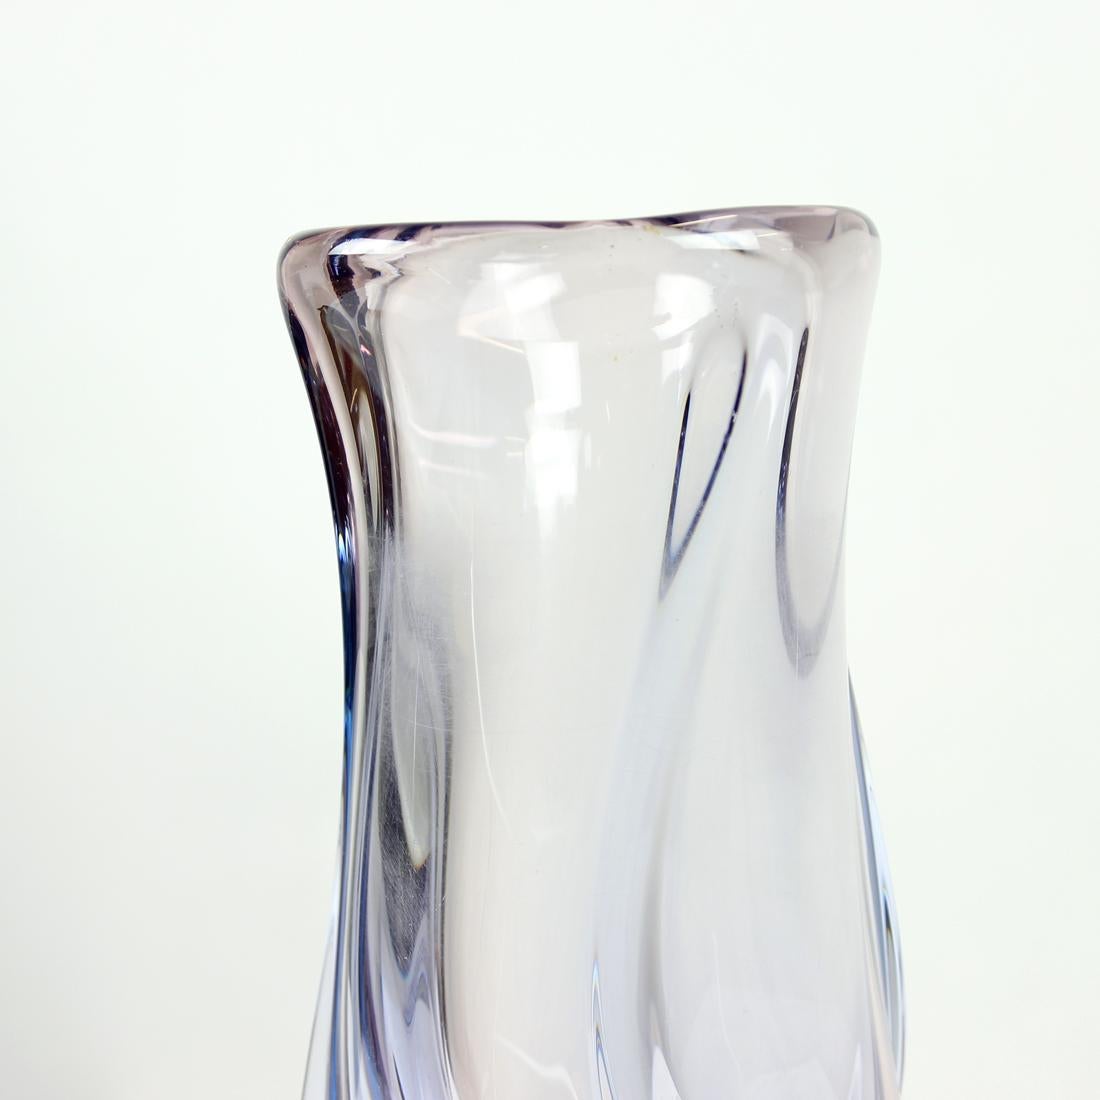 Art Glass Big Murano Glass Vase By Hospodka, Czechoslovakia 1960s For Sale